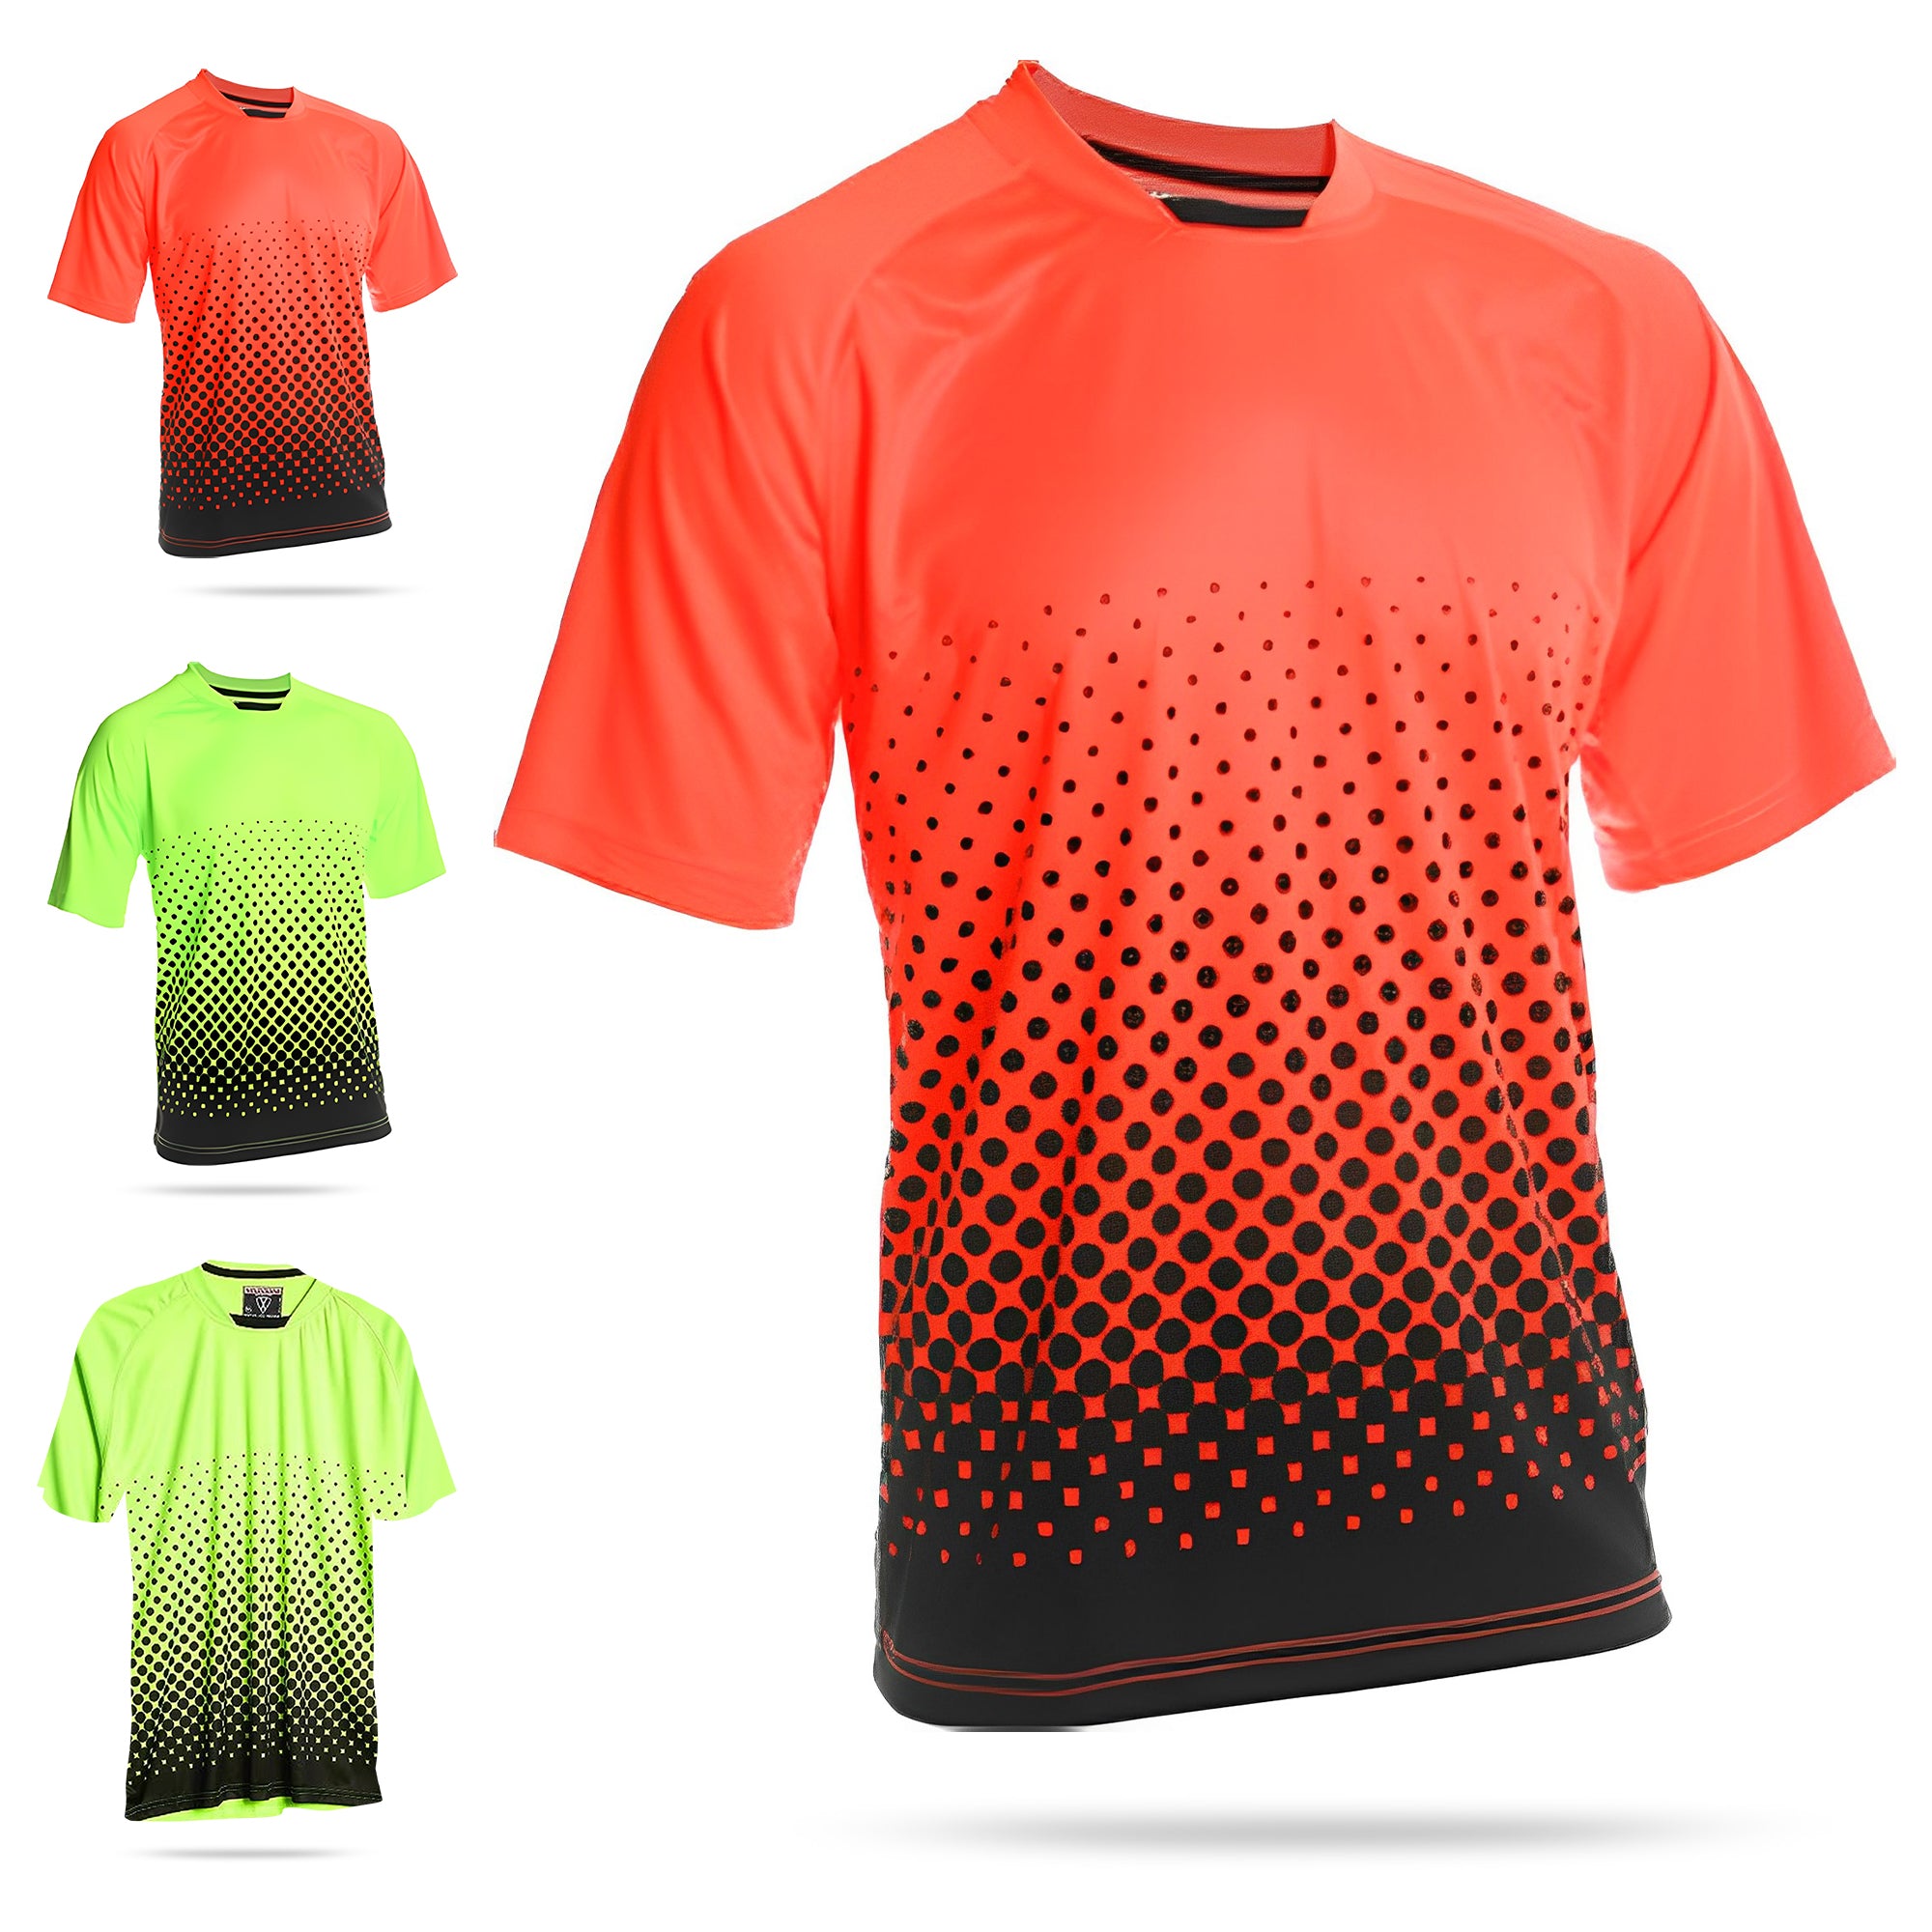 Ventura Short Sleeve Goalkeeping Jersey-Orange/Black